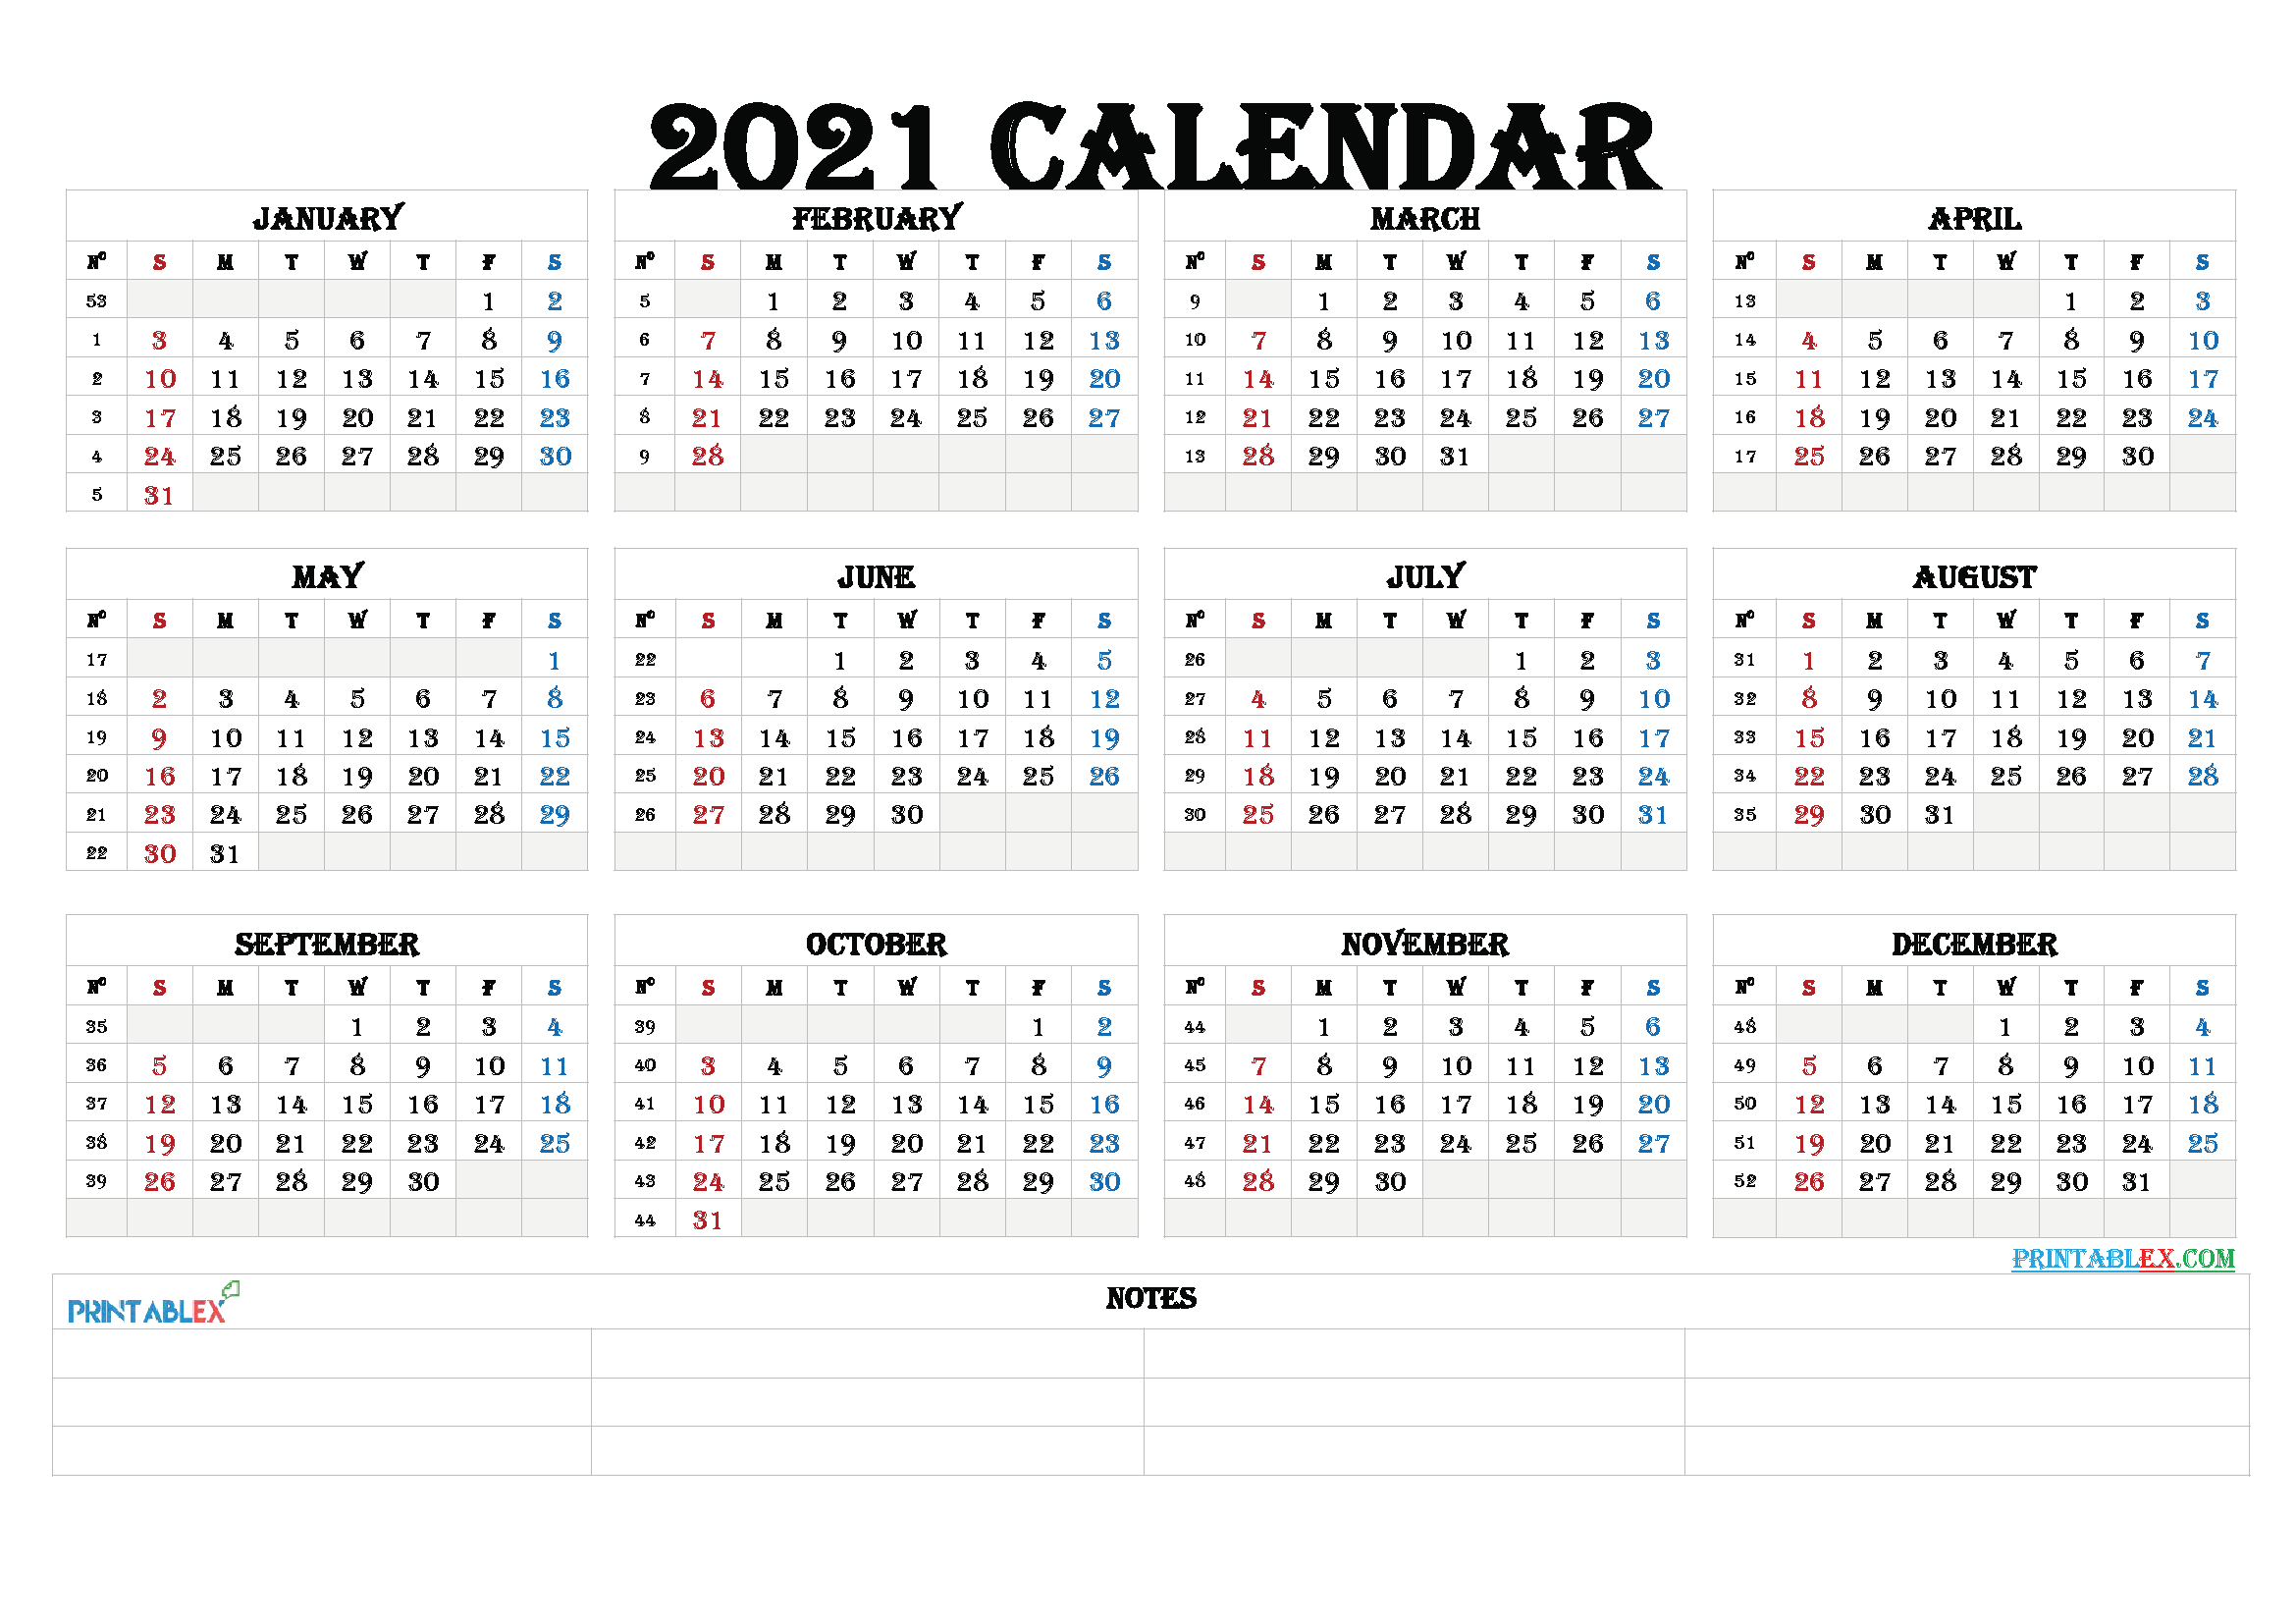 2021 Yearly Calendar Printable Word : 2021 Editable Yearly Calendar Templates In Ms Word Excel-Ms Word Calendar 2021